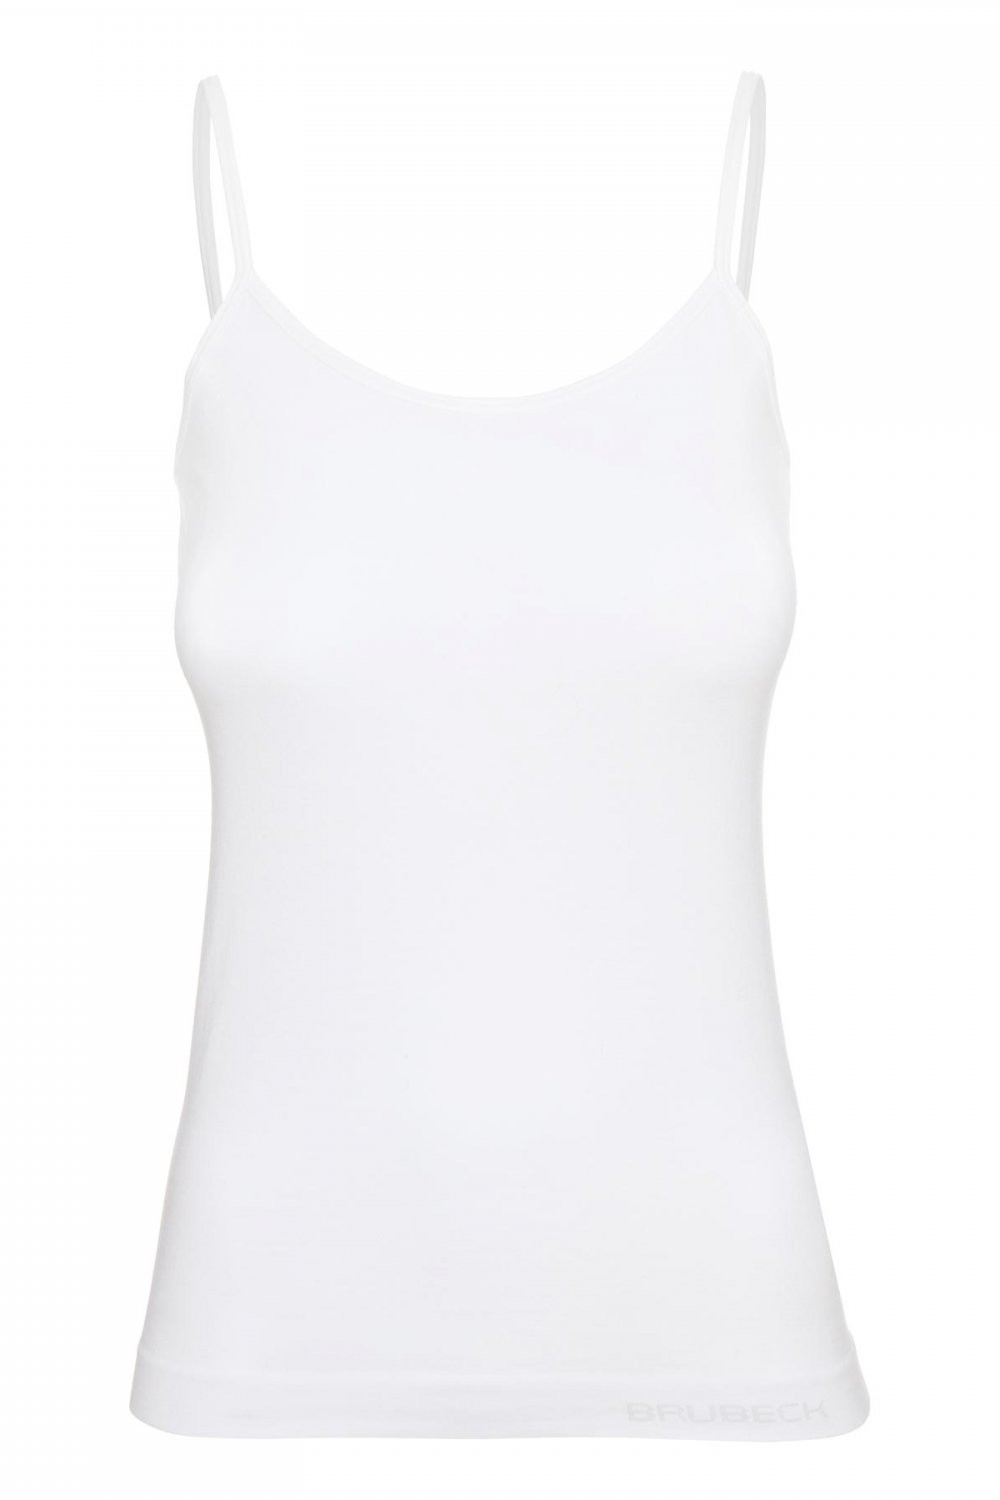 Dámská košilka model 16737981 white - Brubeck Barva: Bílá, Velikost: XL